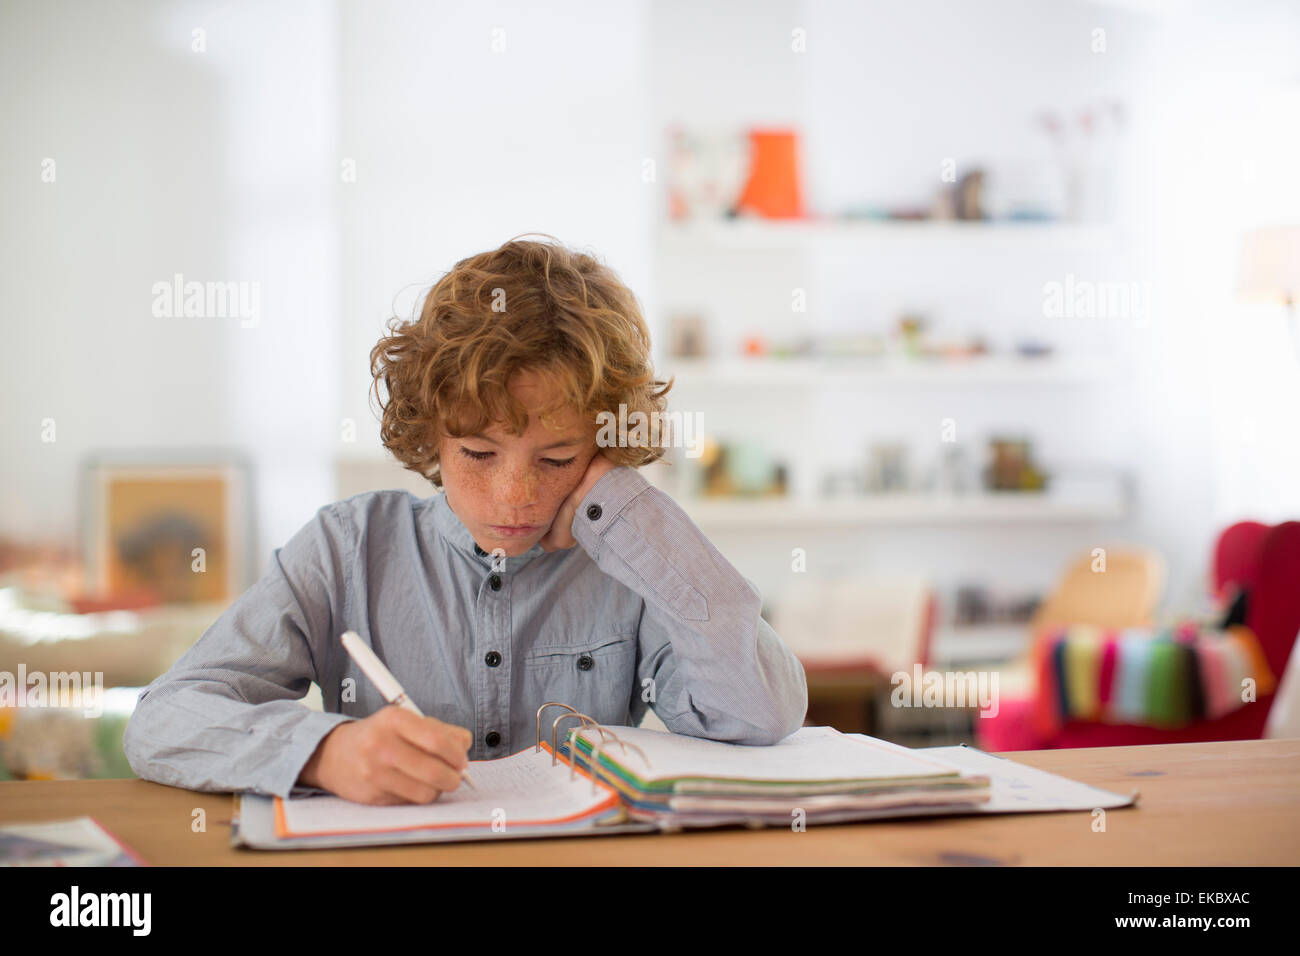 Teenage boy studying and writing notes Stock Photo